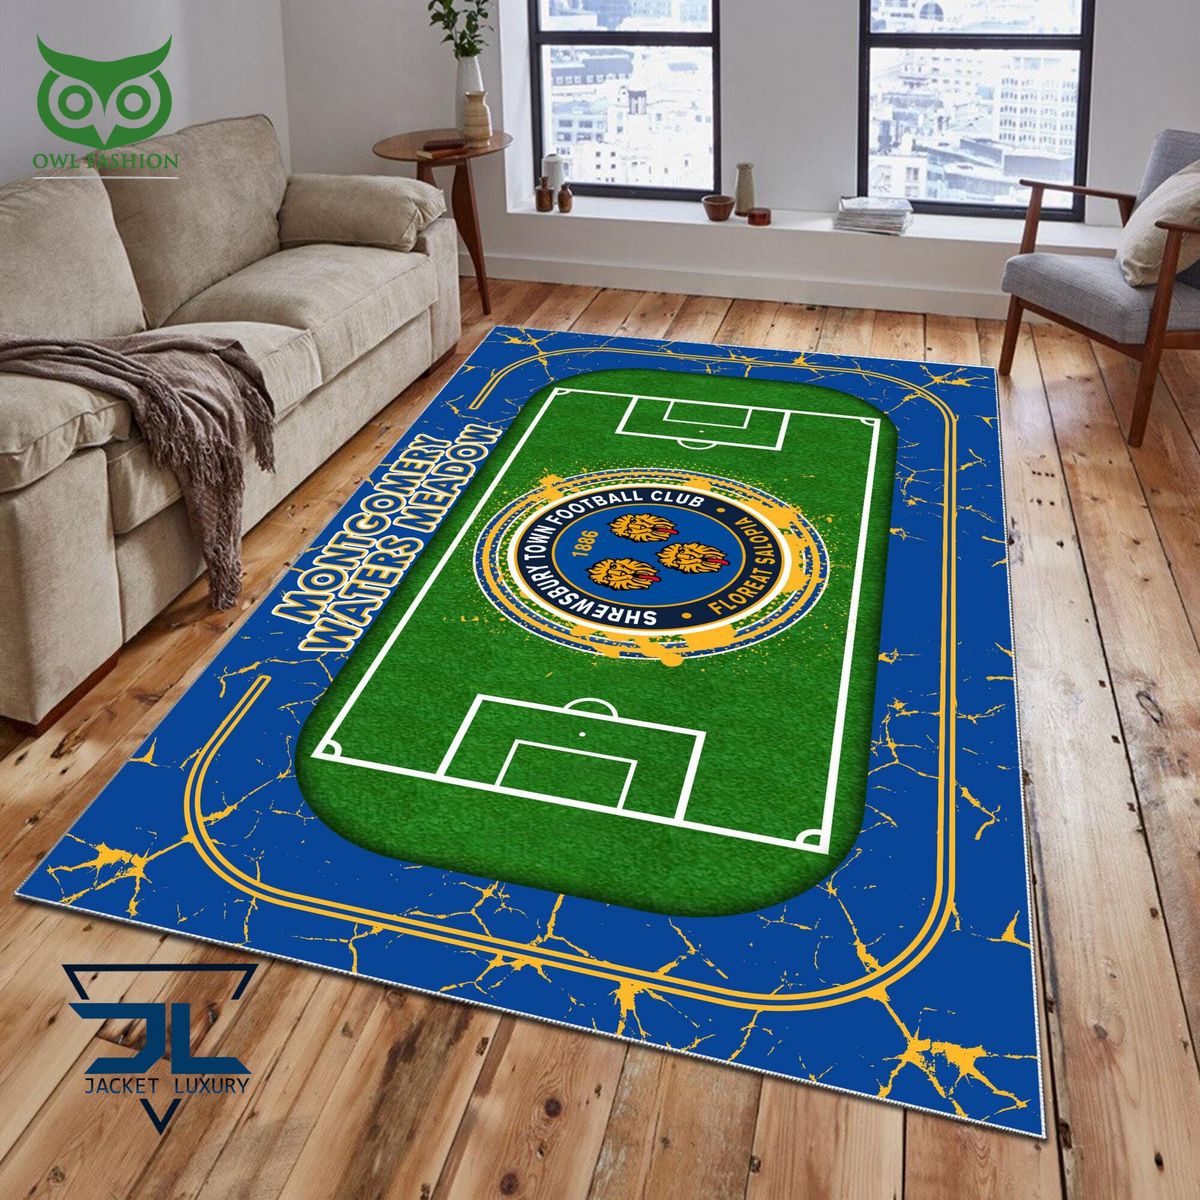 shrewsbury town english football league efl premium carpet rug 1 TheDQ